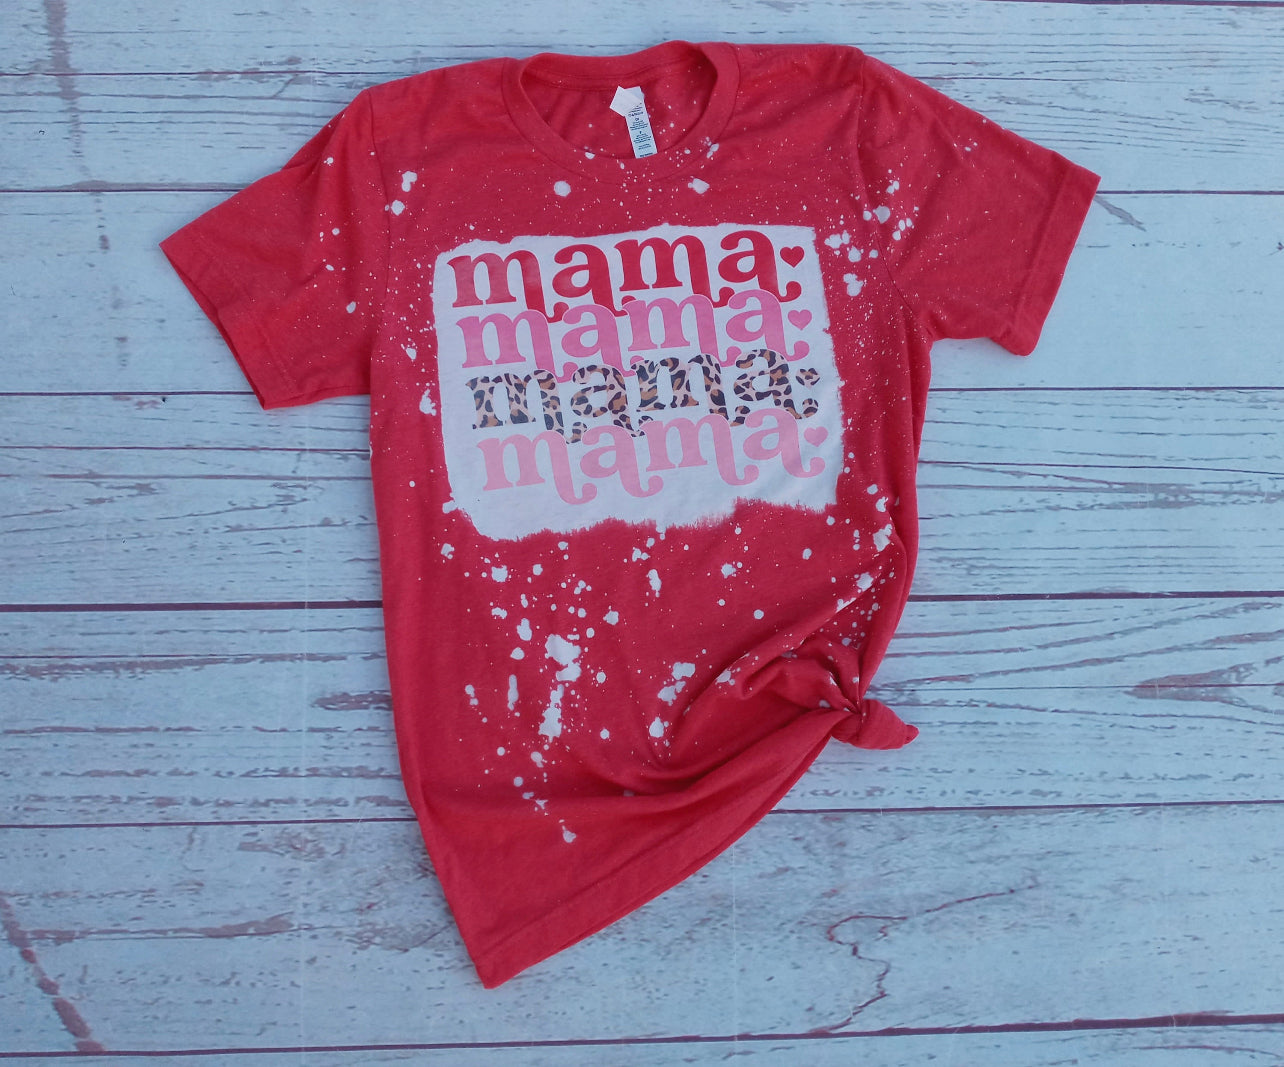 Mama mama bleached shirt